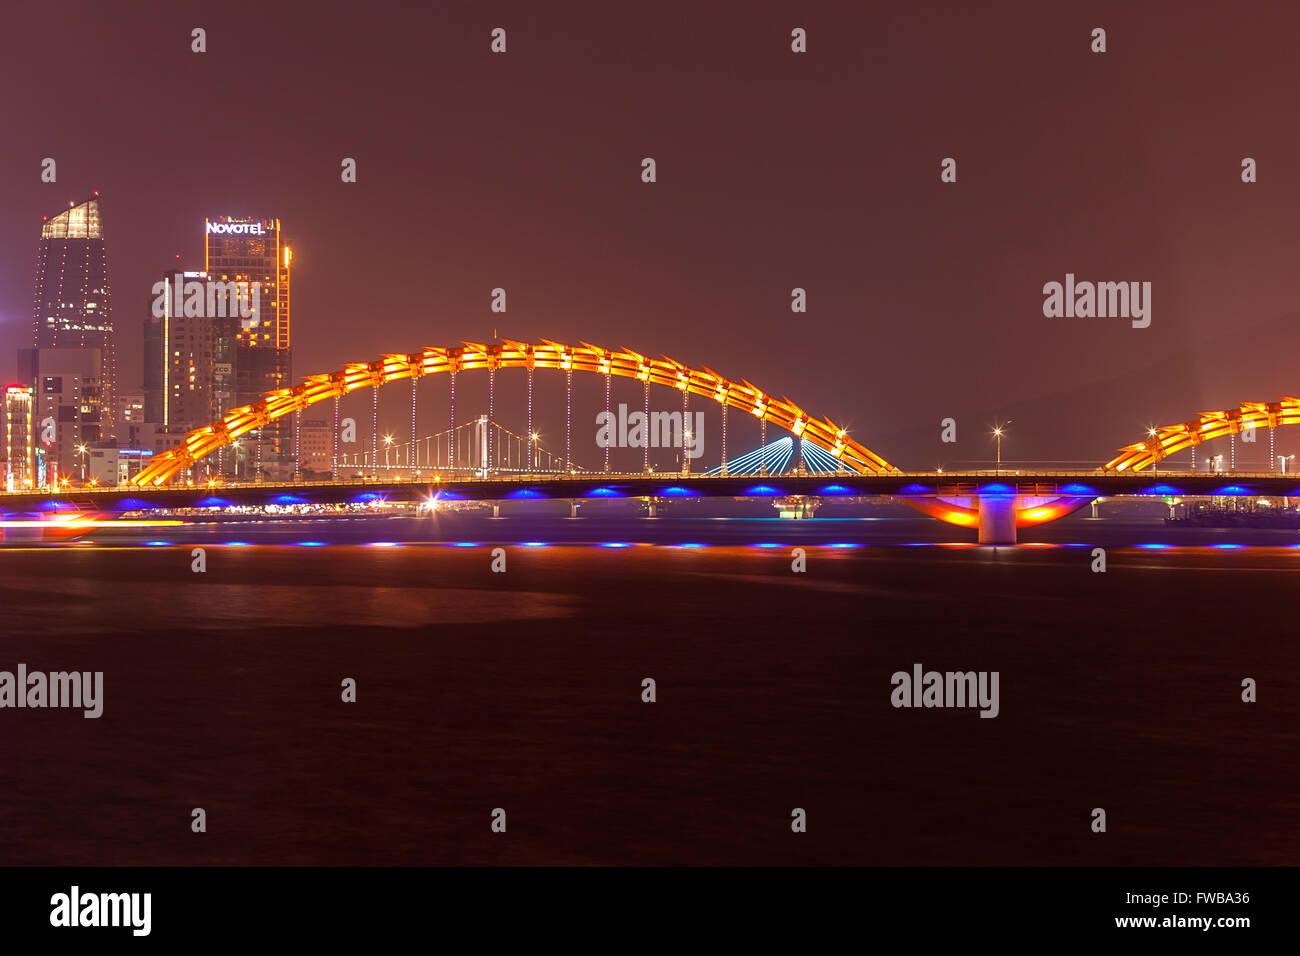 Illuminated Cầu Rồng or dragon bridge over the Han River at night, Da Nang, Central Vietnam, Vietnam Stock Photo